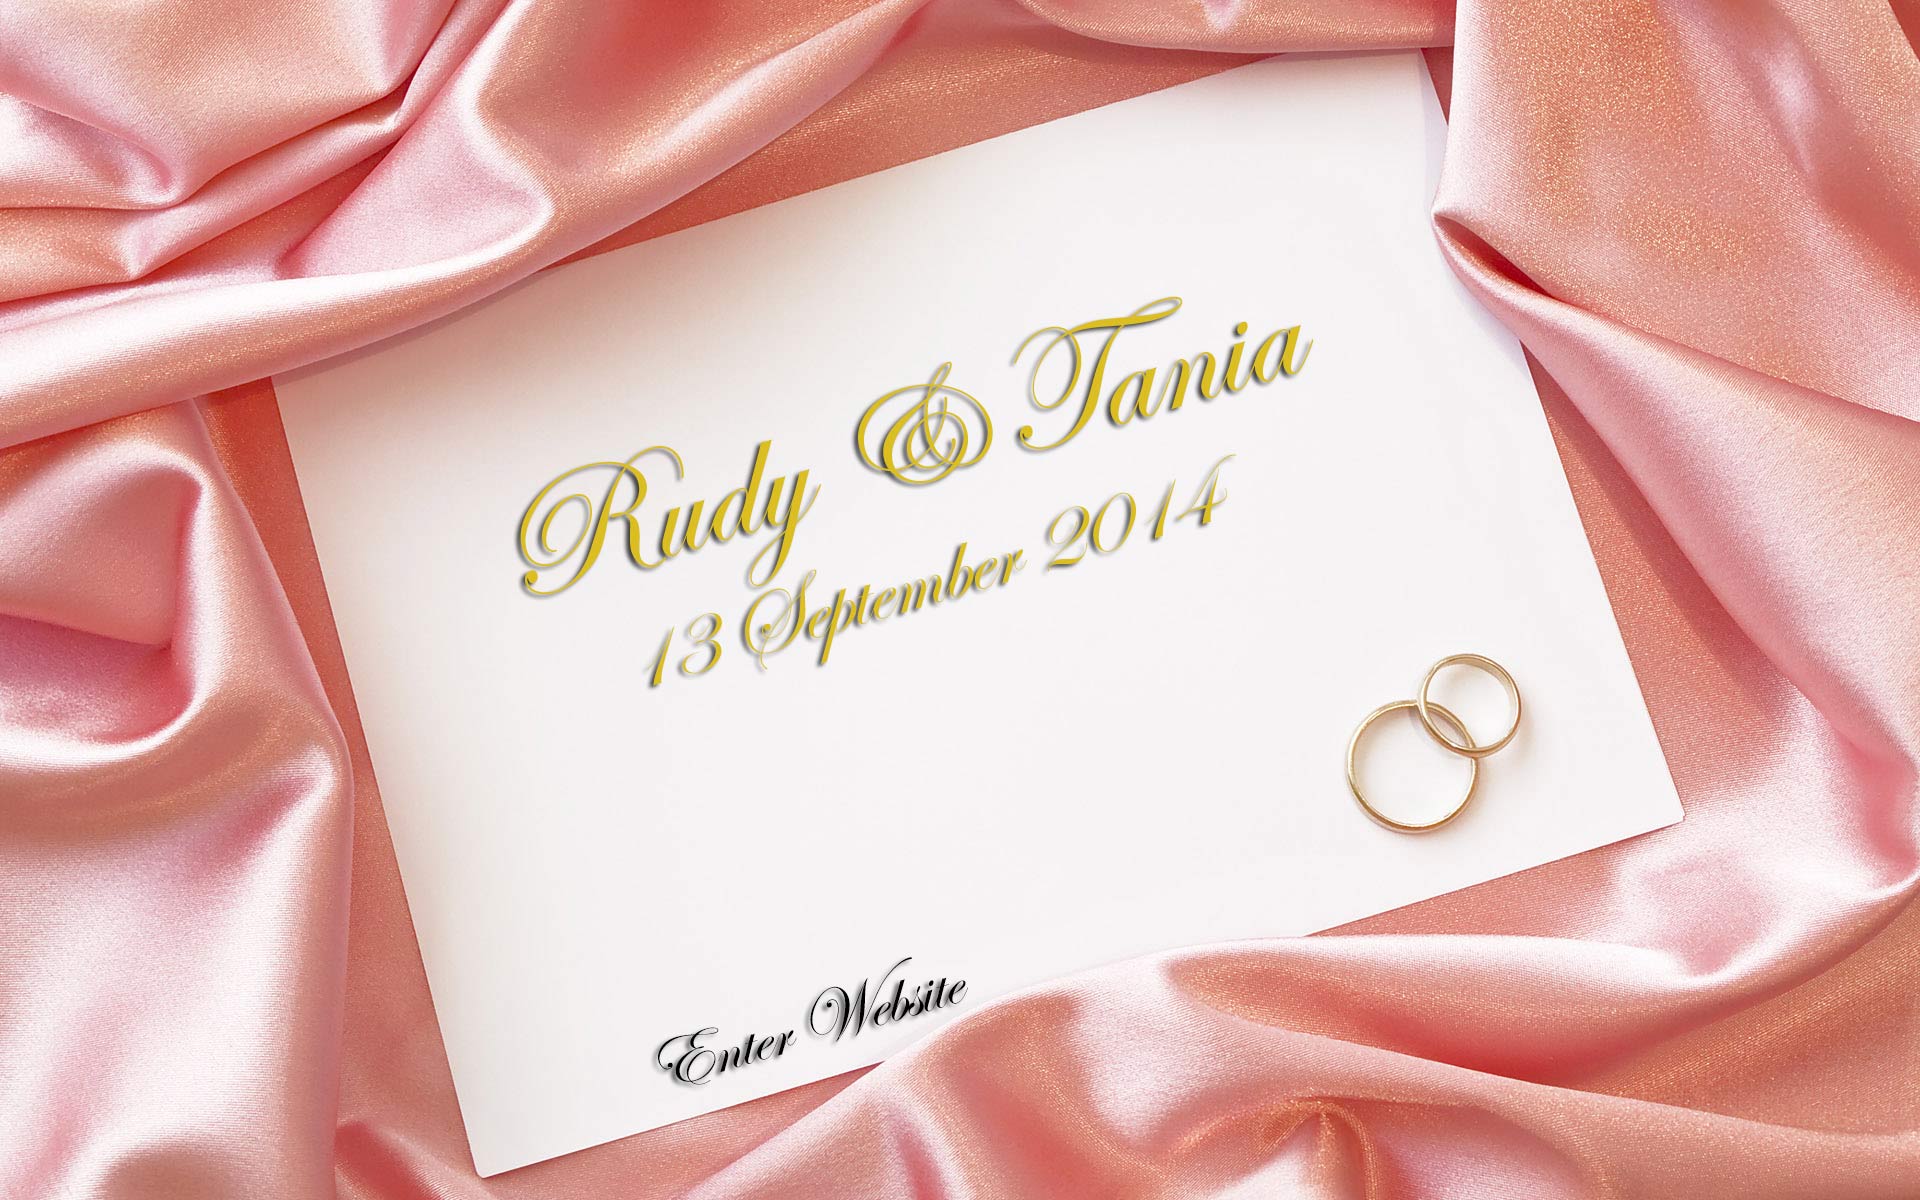 Rudy & Tania - 13 september 2014